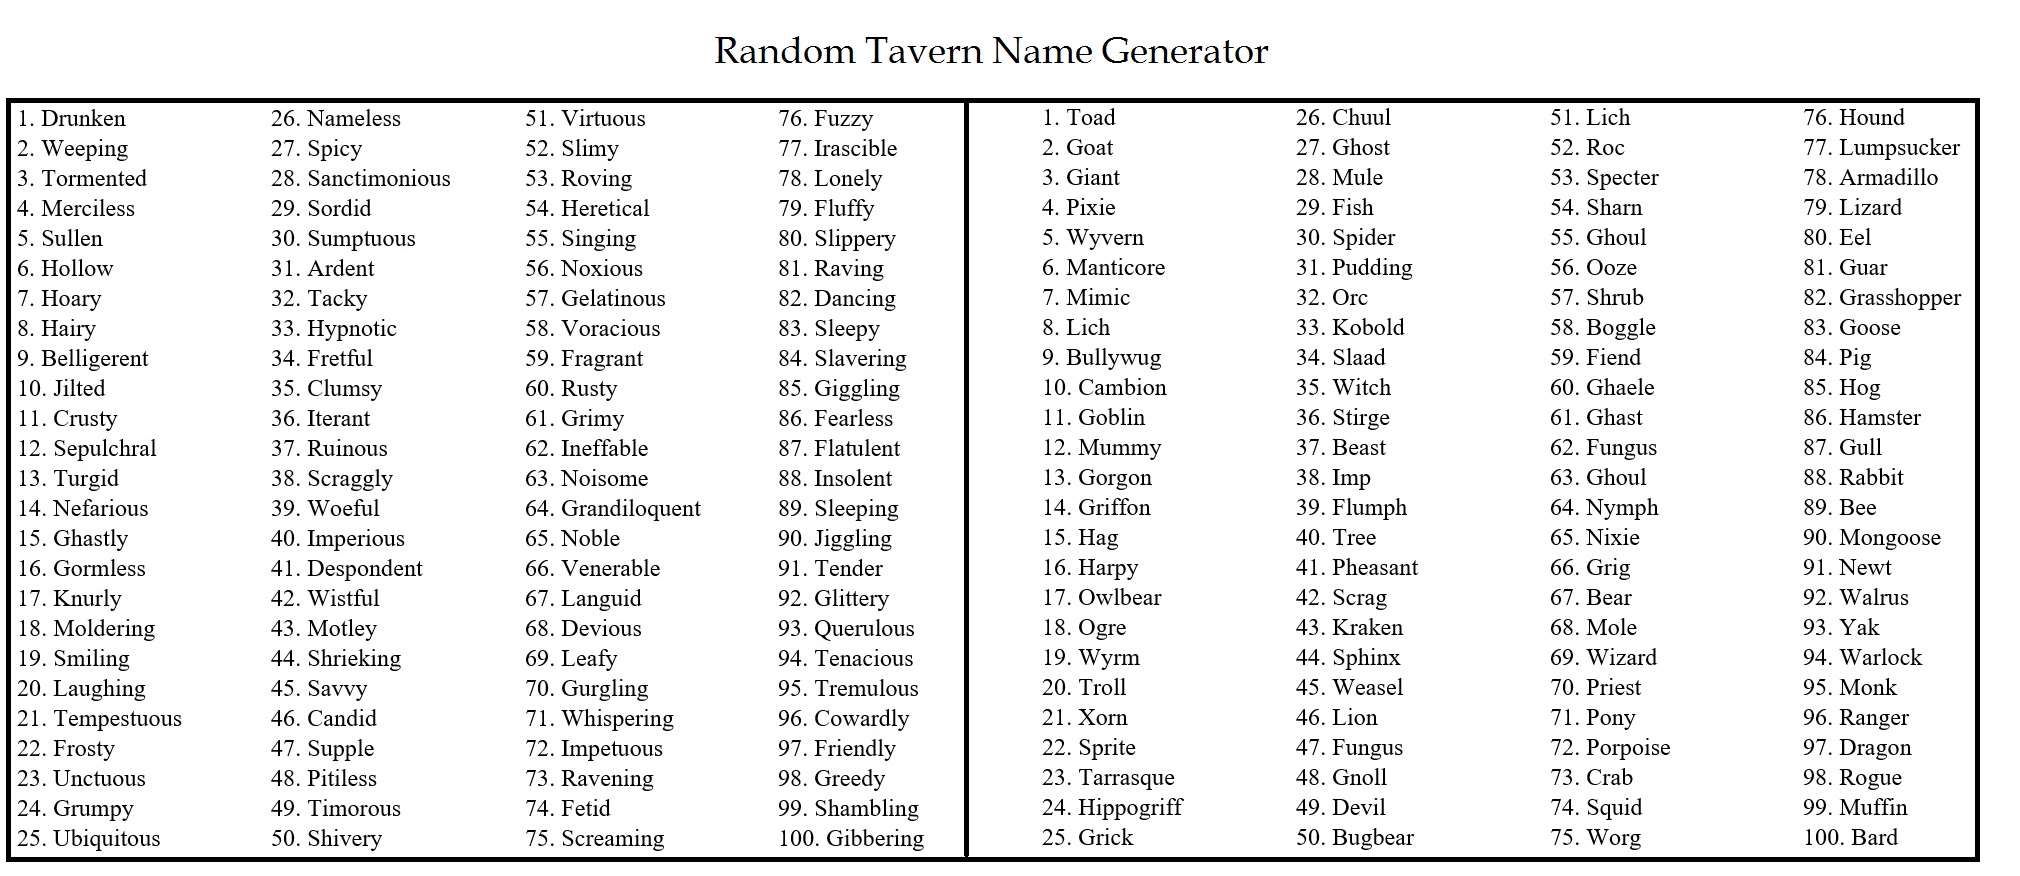 random name list generator